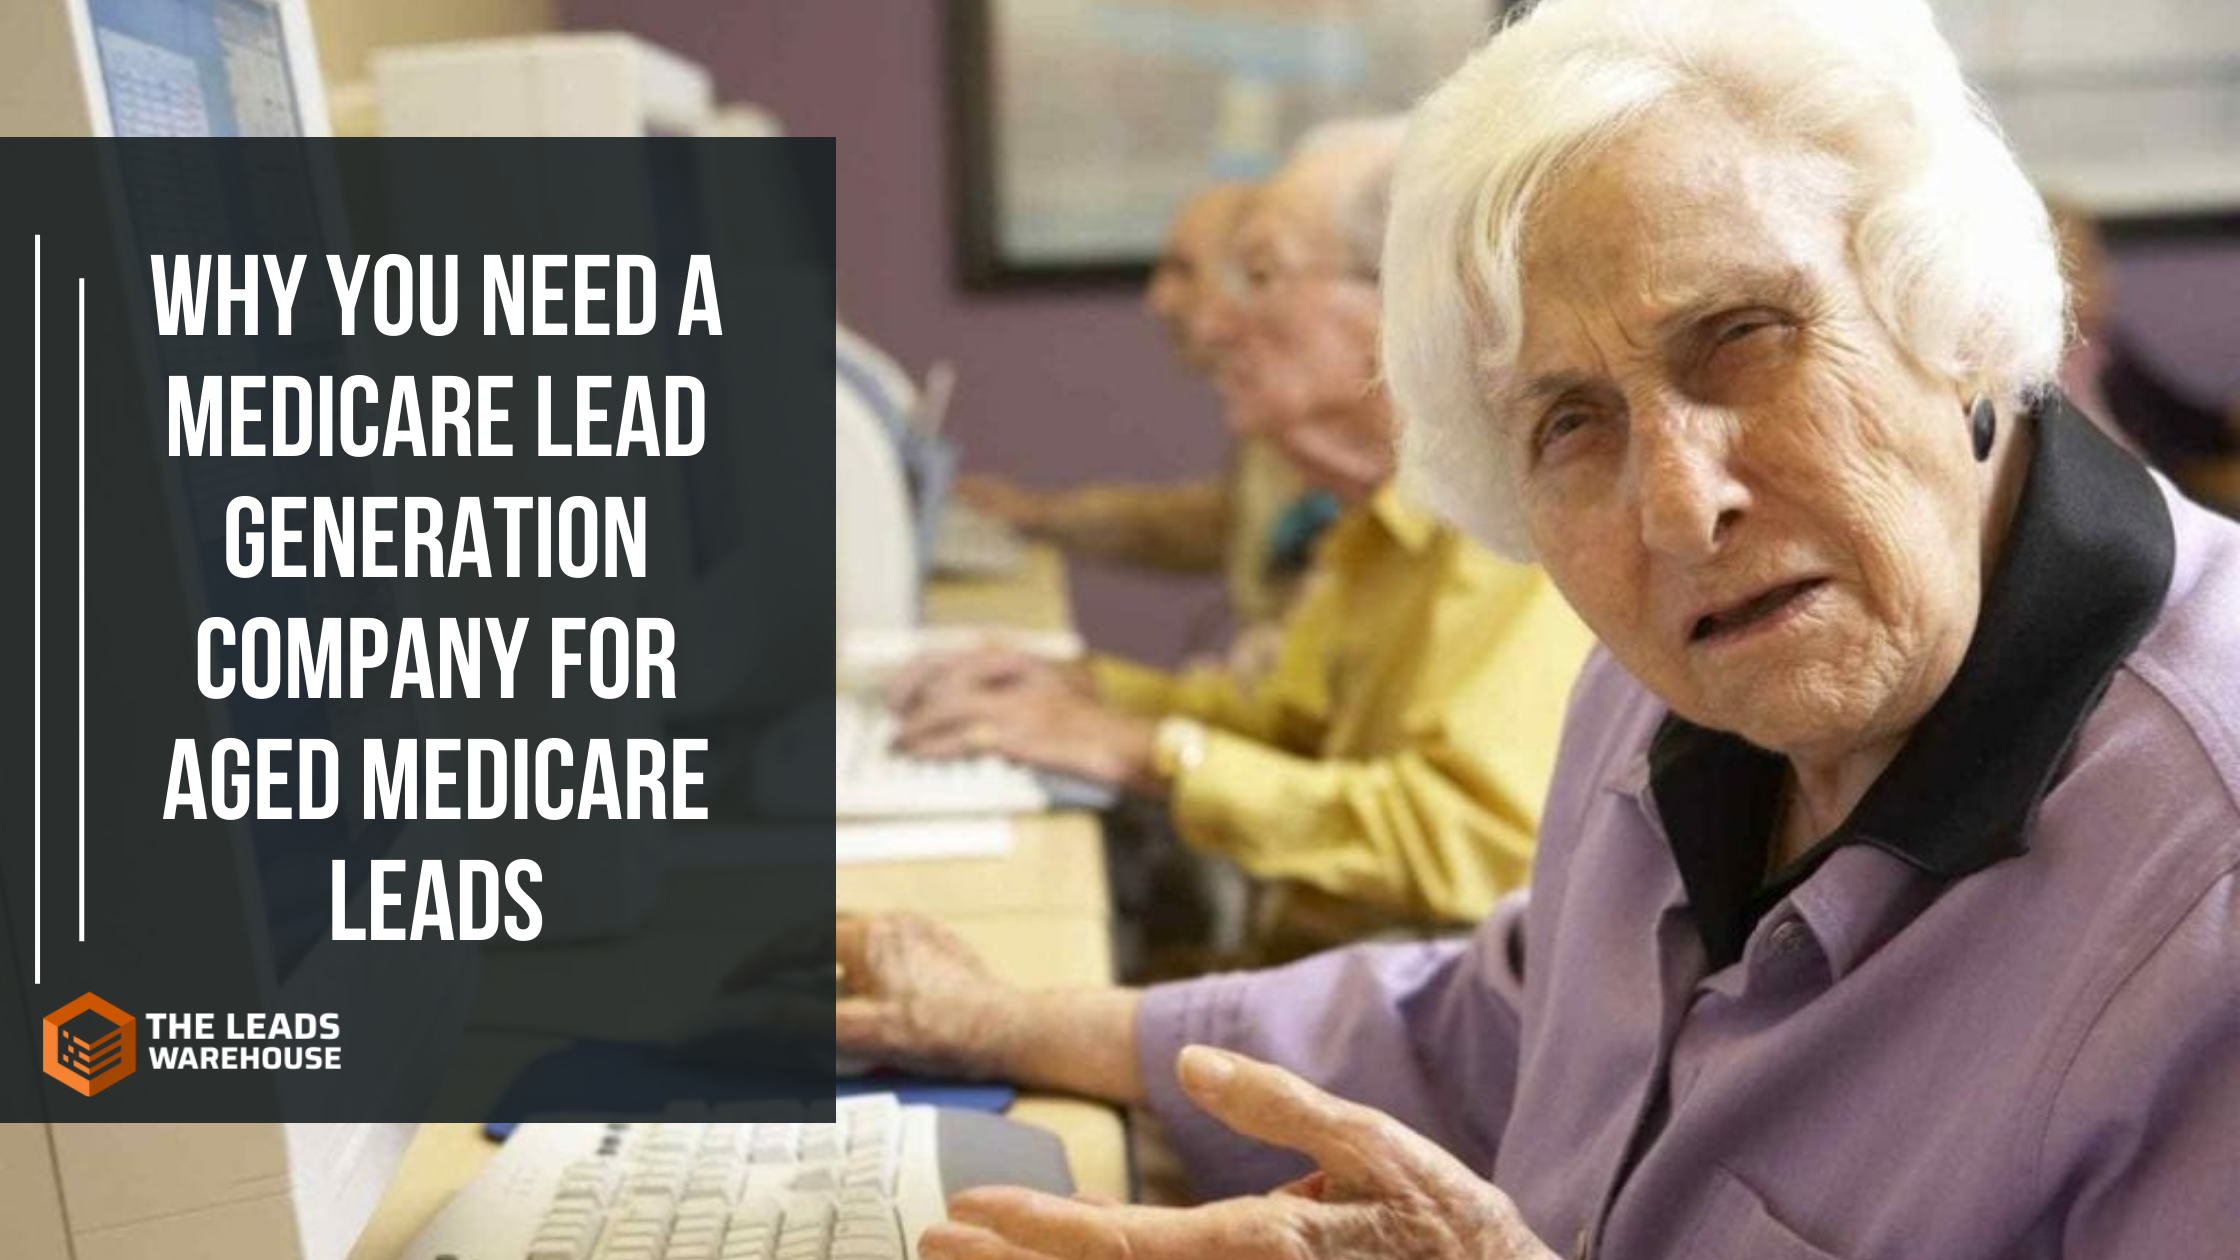 Aged Medicare Leads